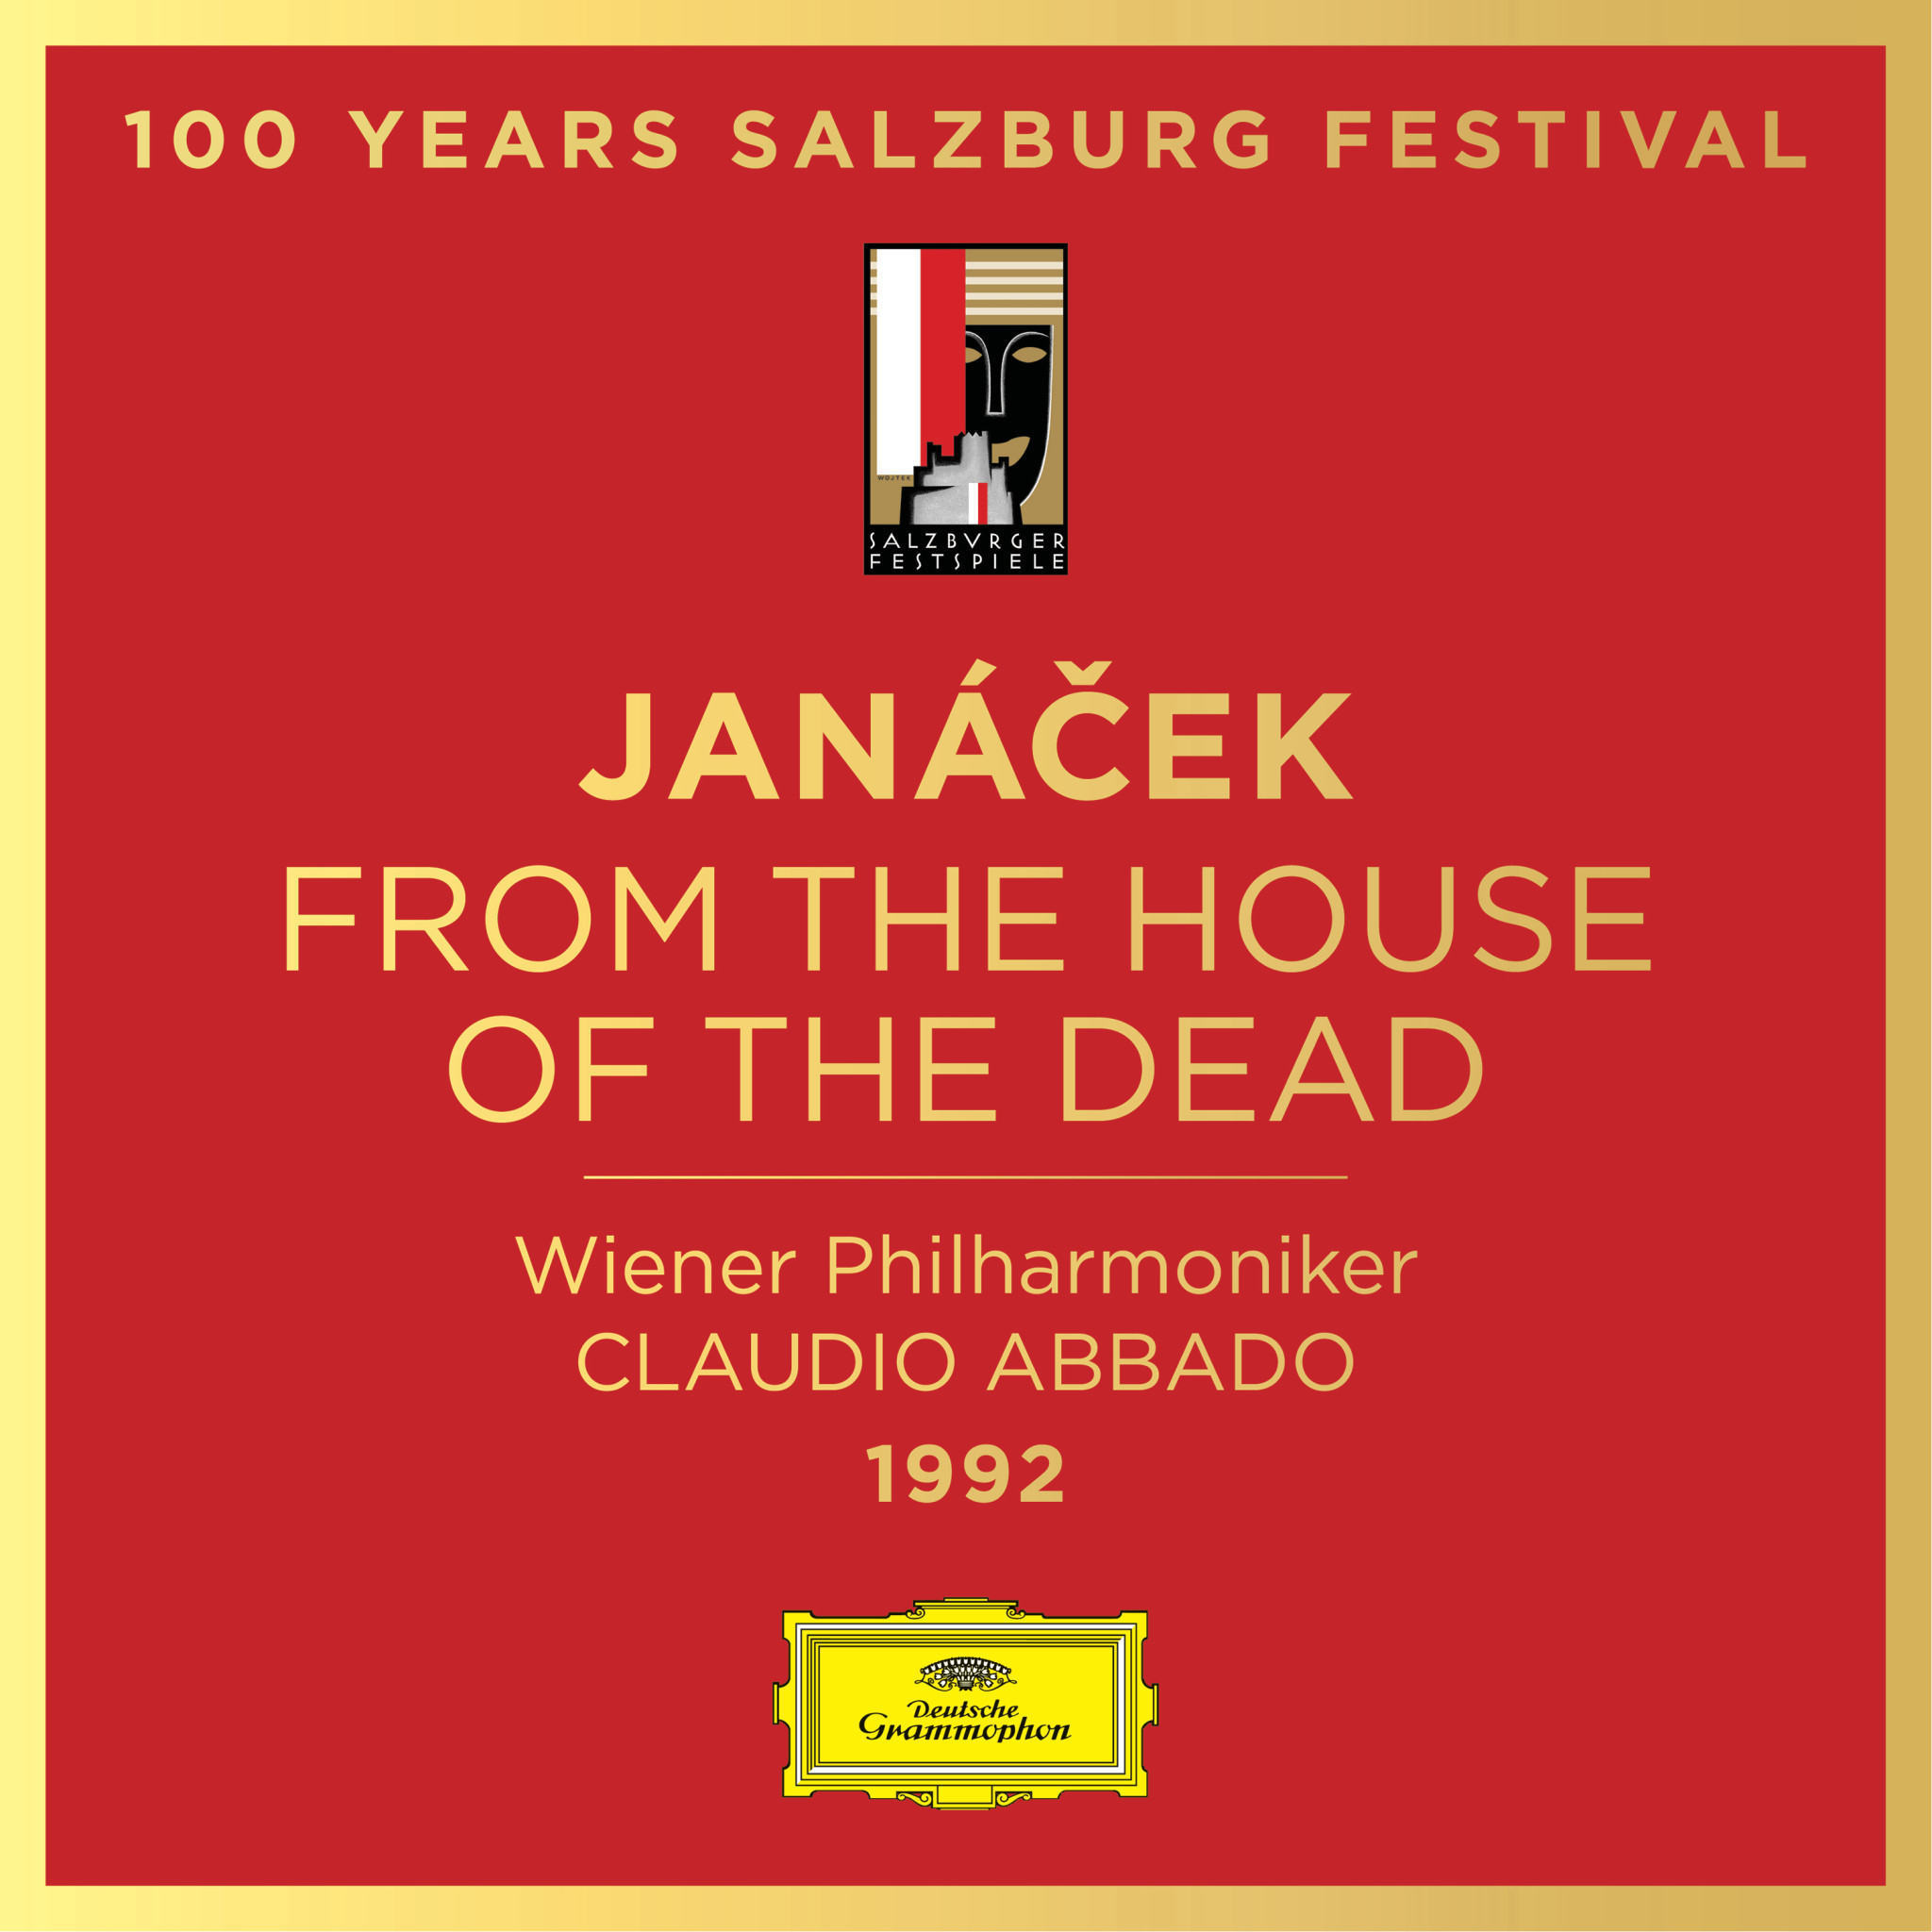 Janacek from the house of the dead Salzburg Festival cover